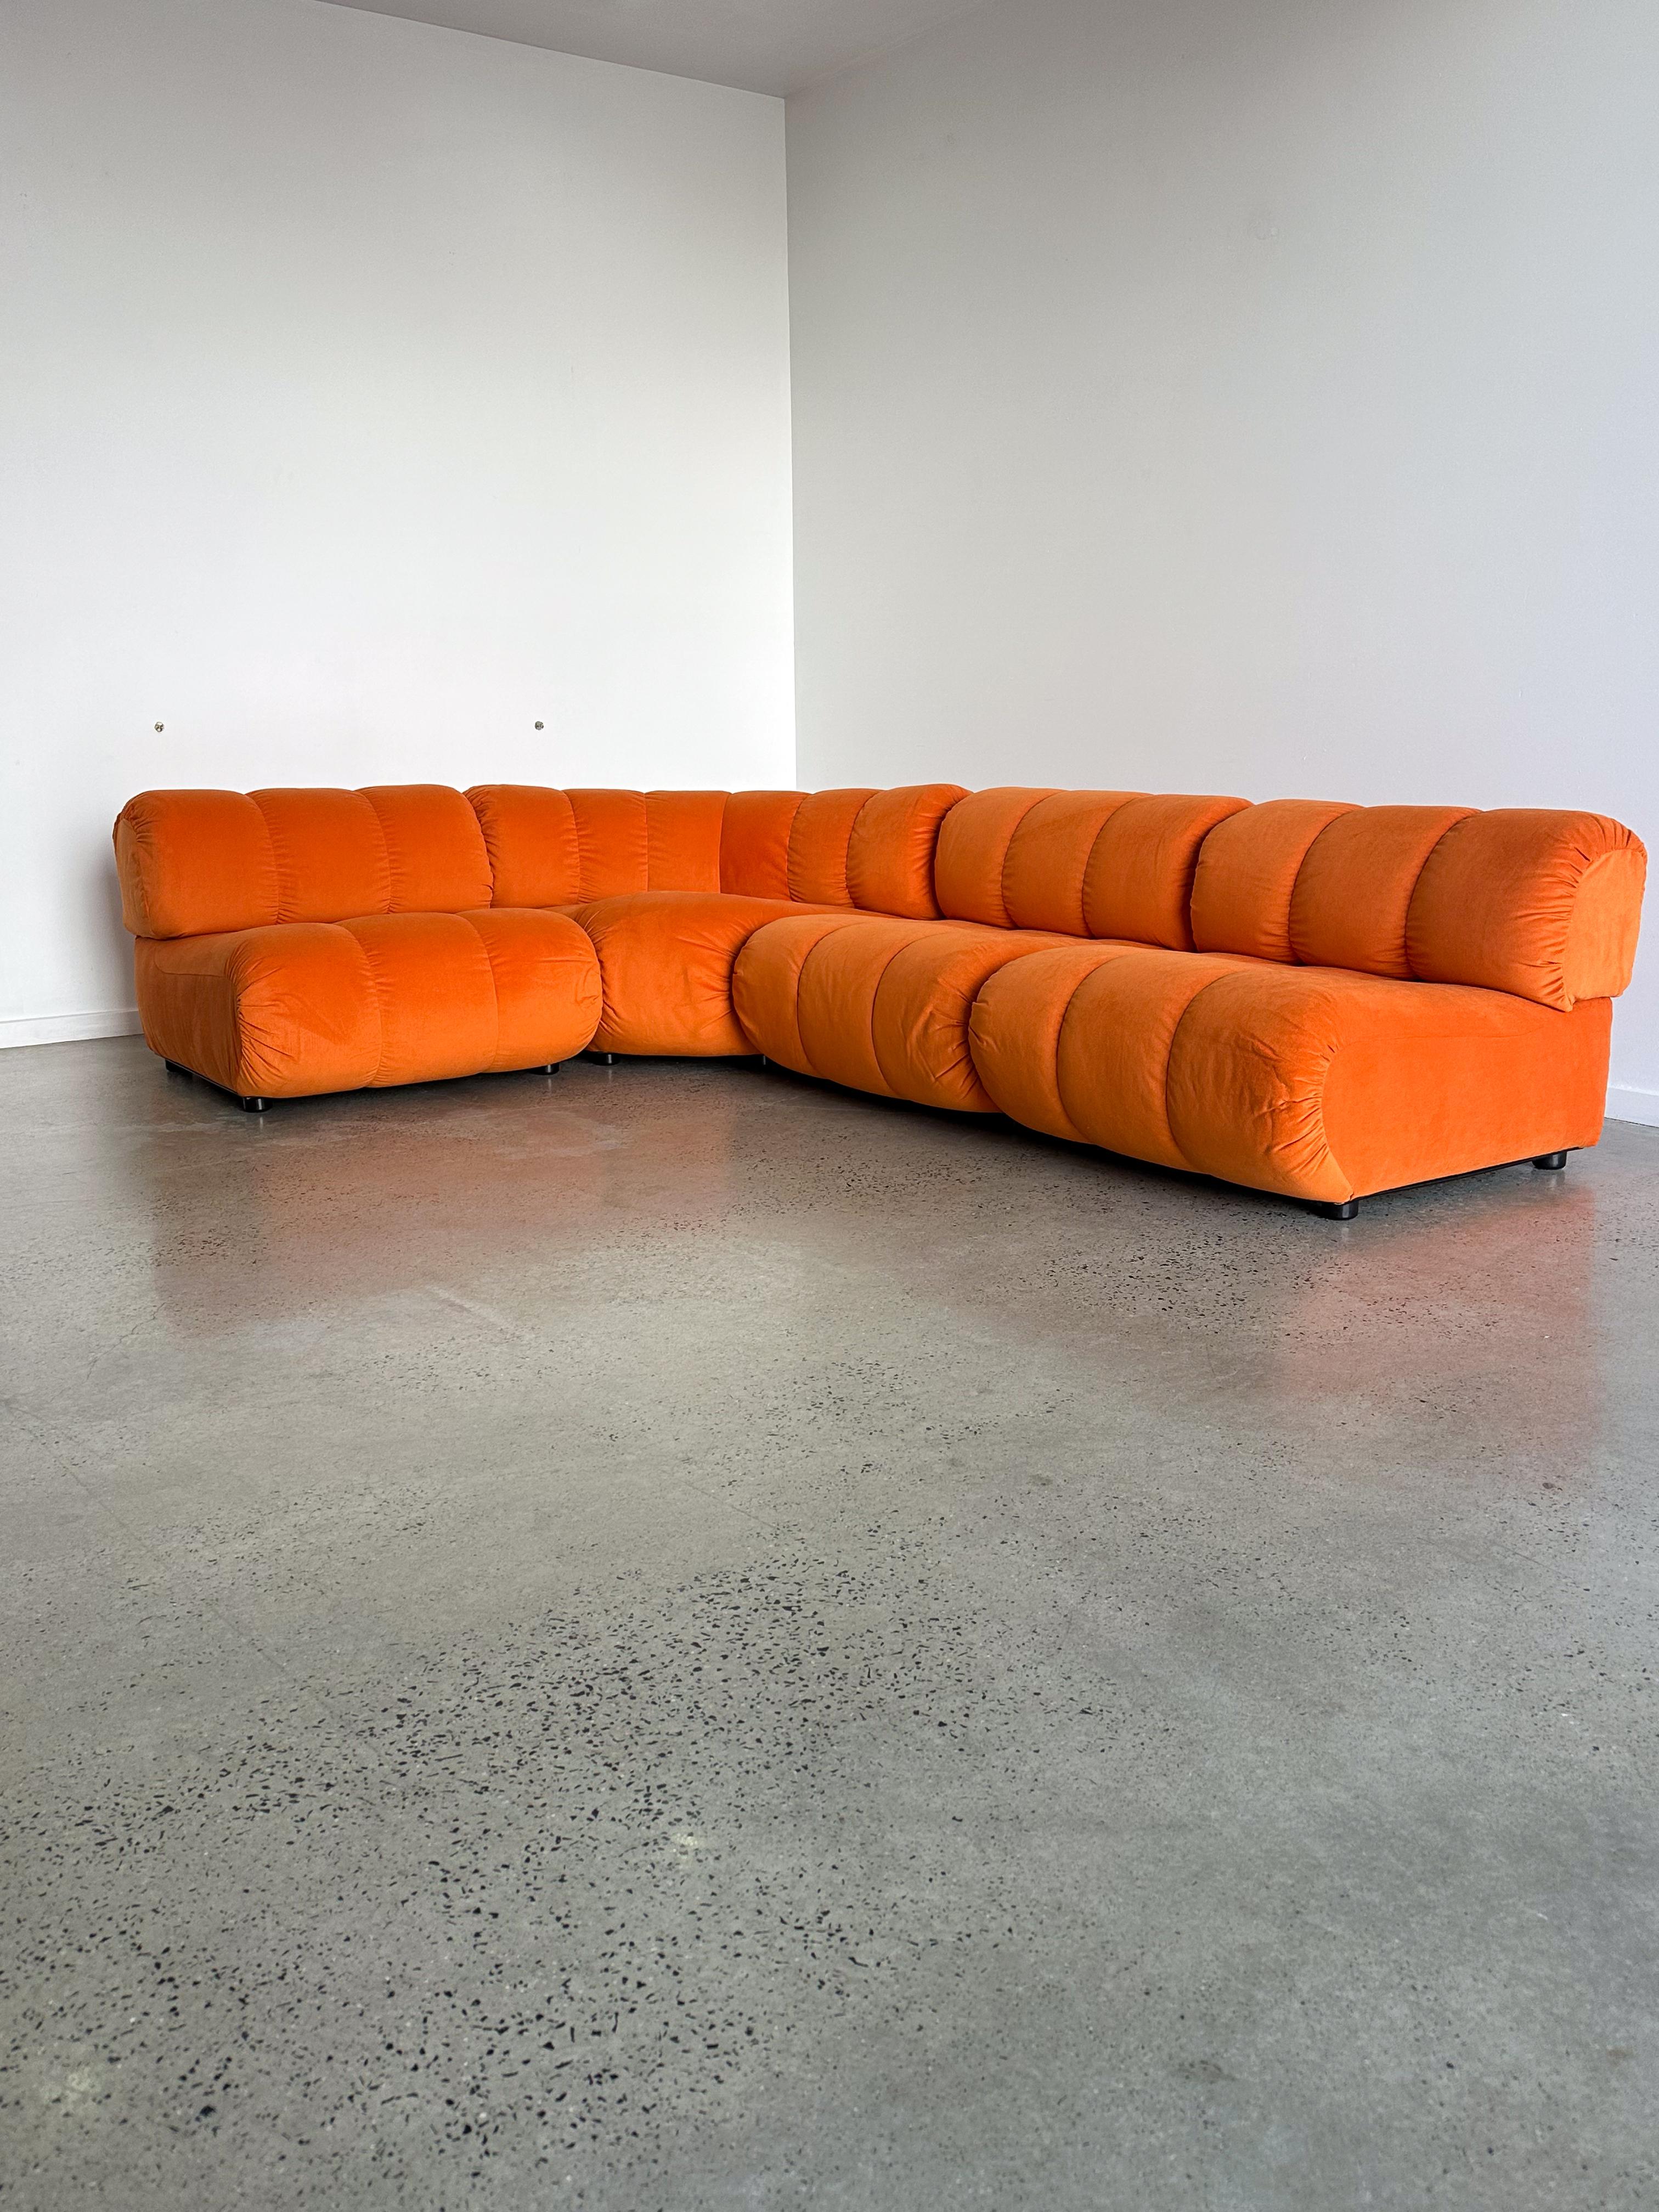 Giuseppe Munari pour Poltronova - Ensemble de quatre canapés orange modulaires des années 1970 en vente 4